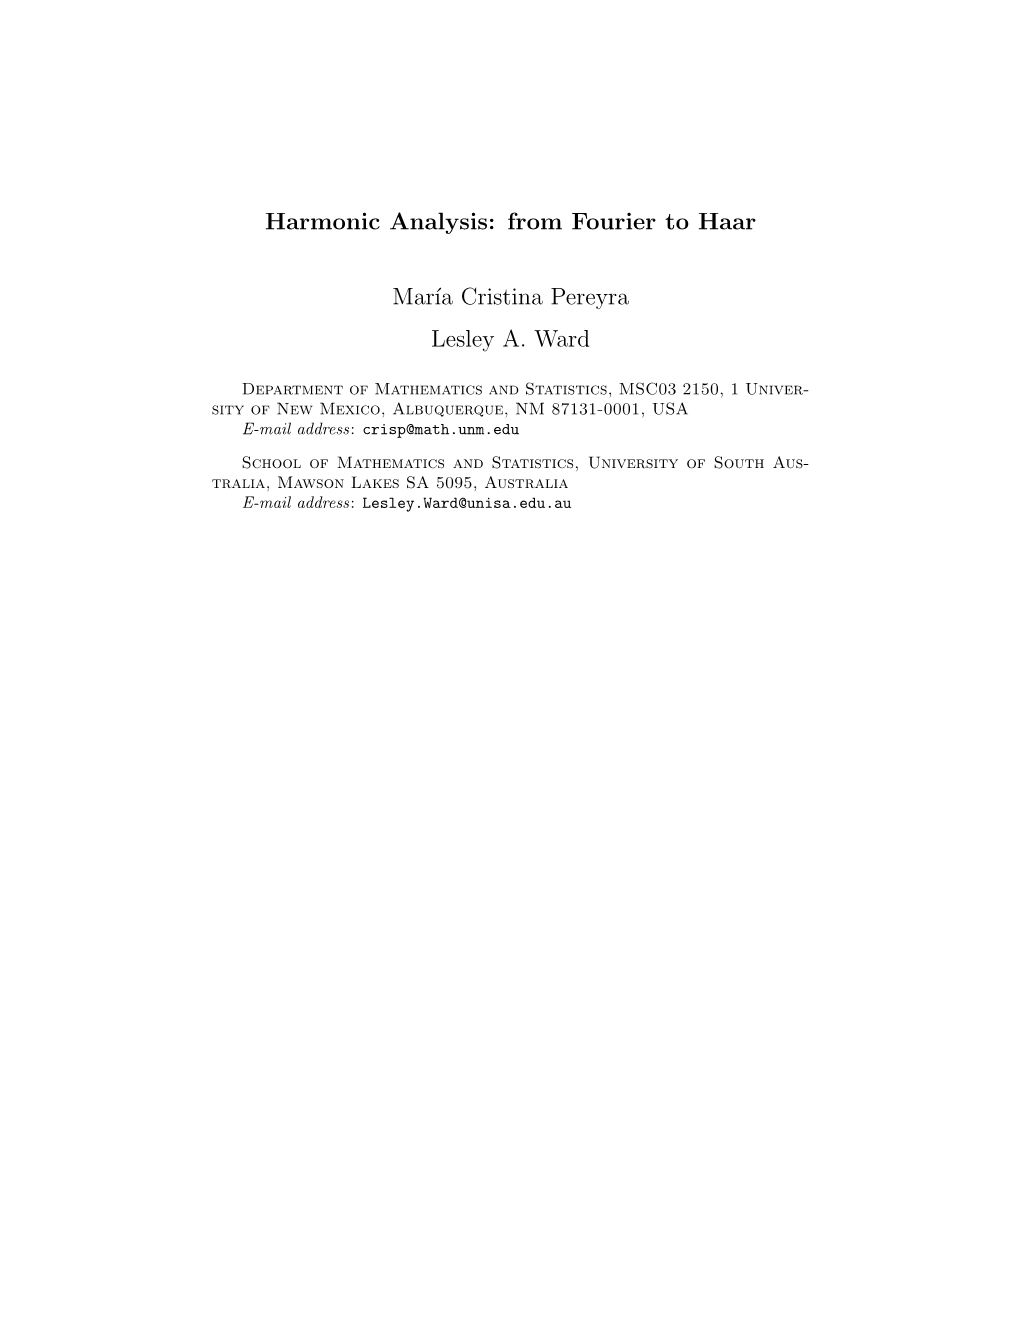 Harmonic Analysis: from Fourier to Haar Mar´Ia Cristina Pereyra Lesley A. Ward